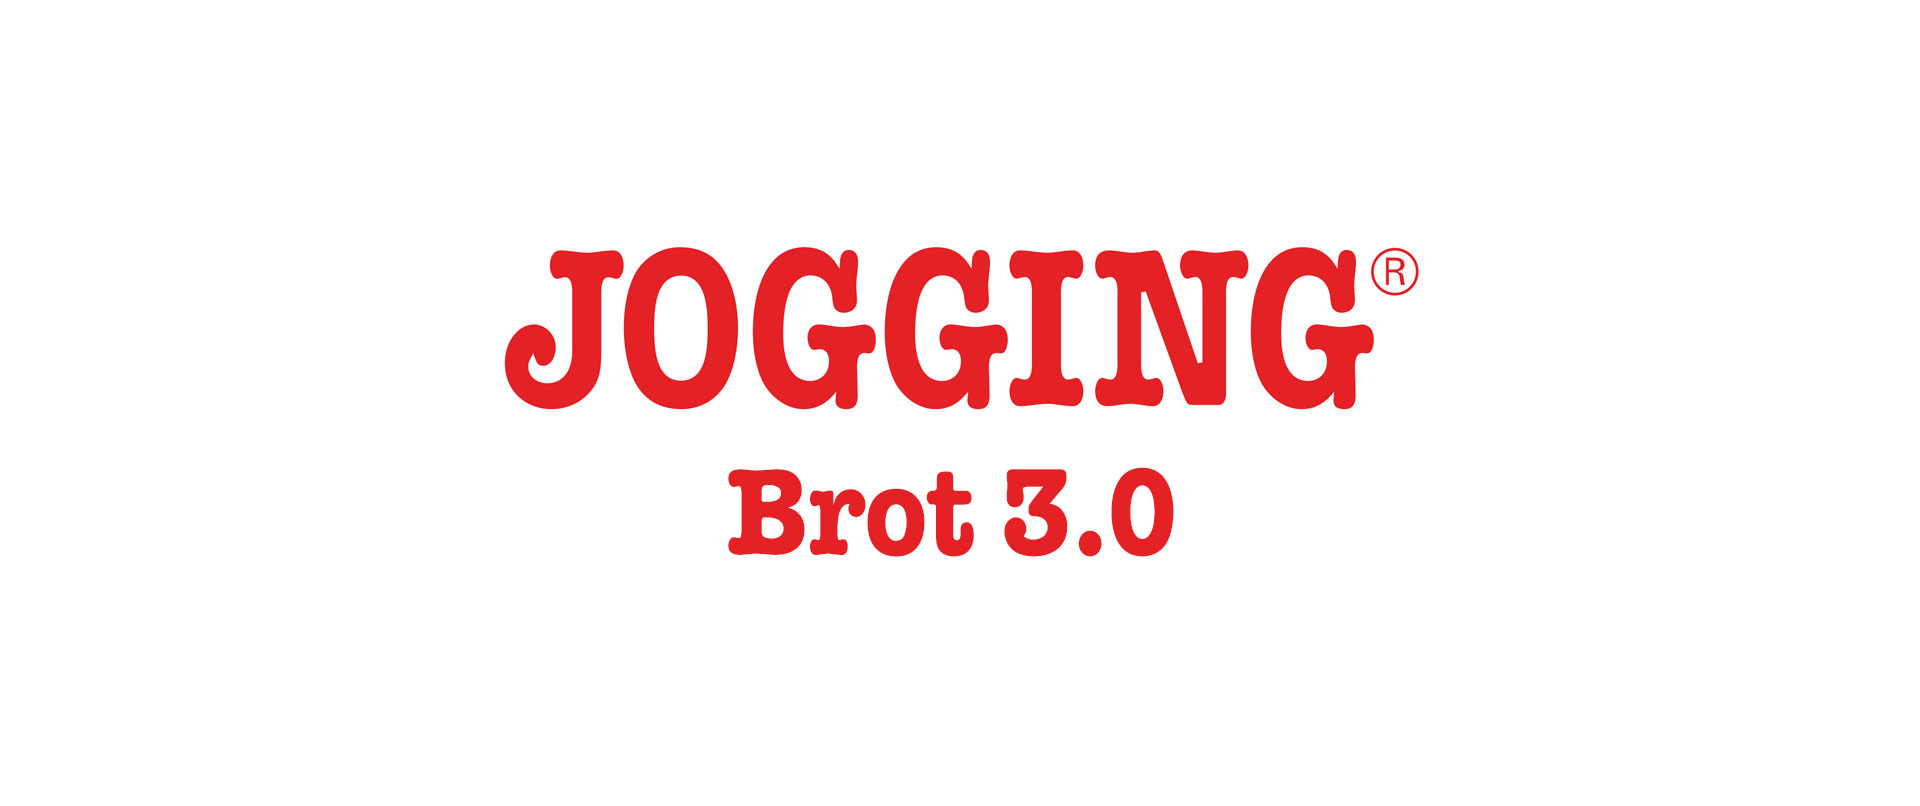 jogging-3punkt0